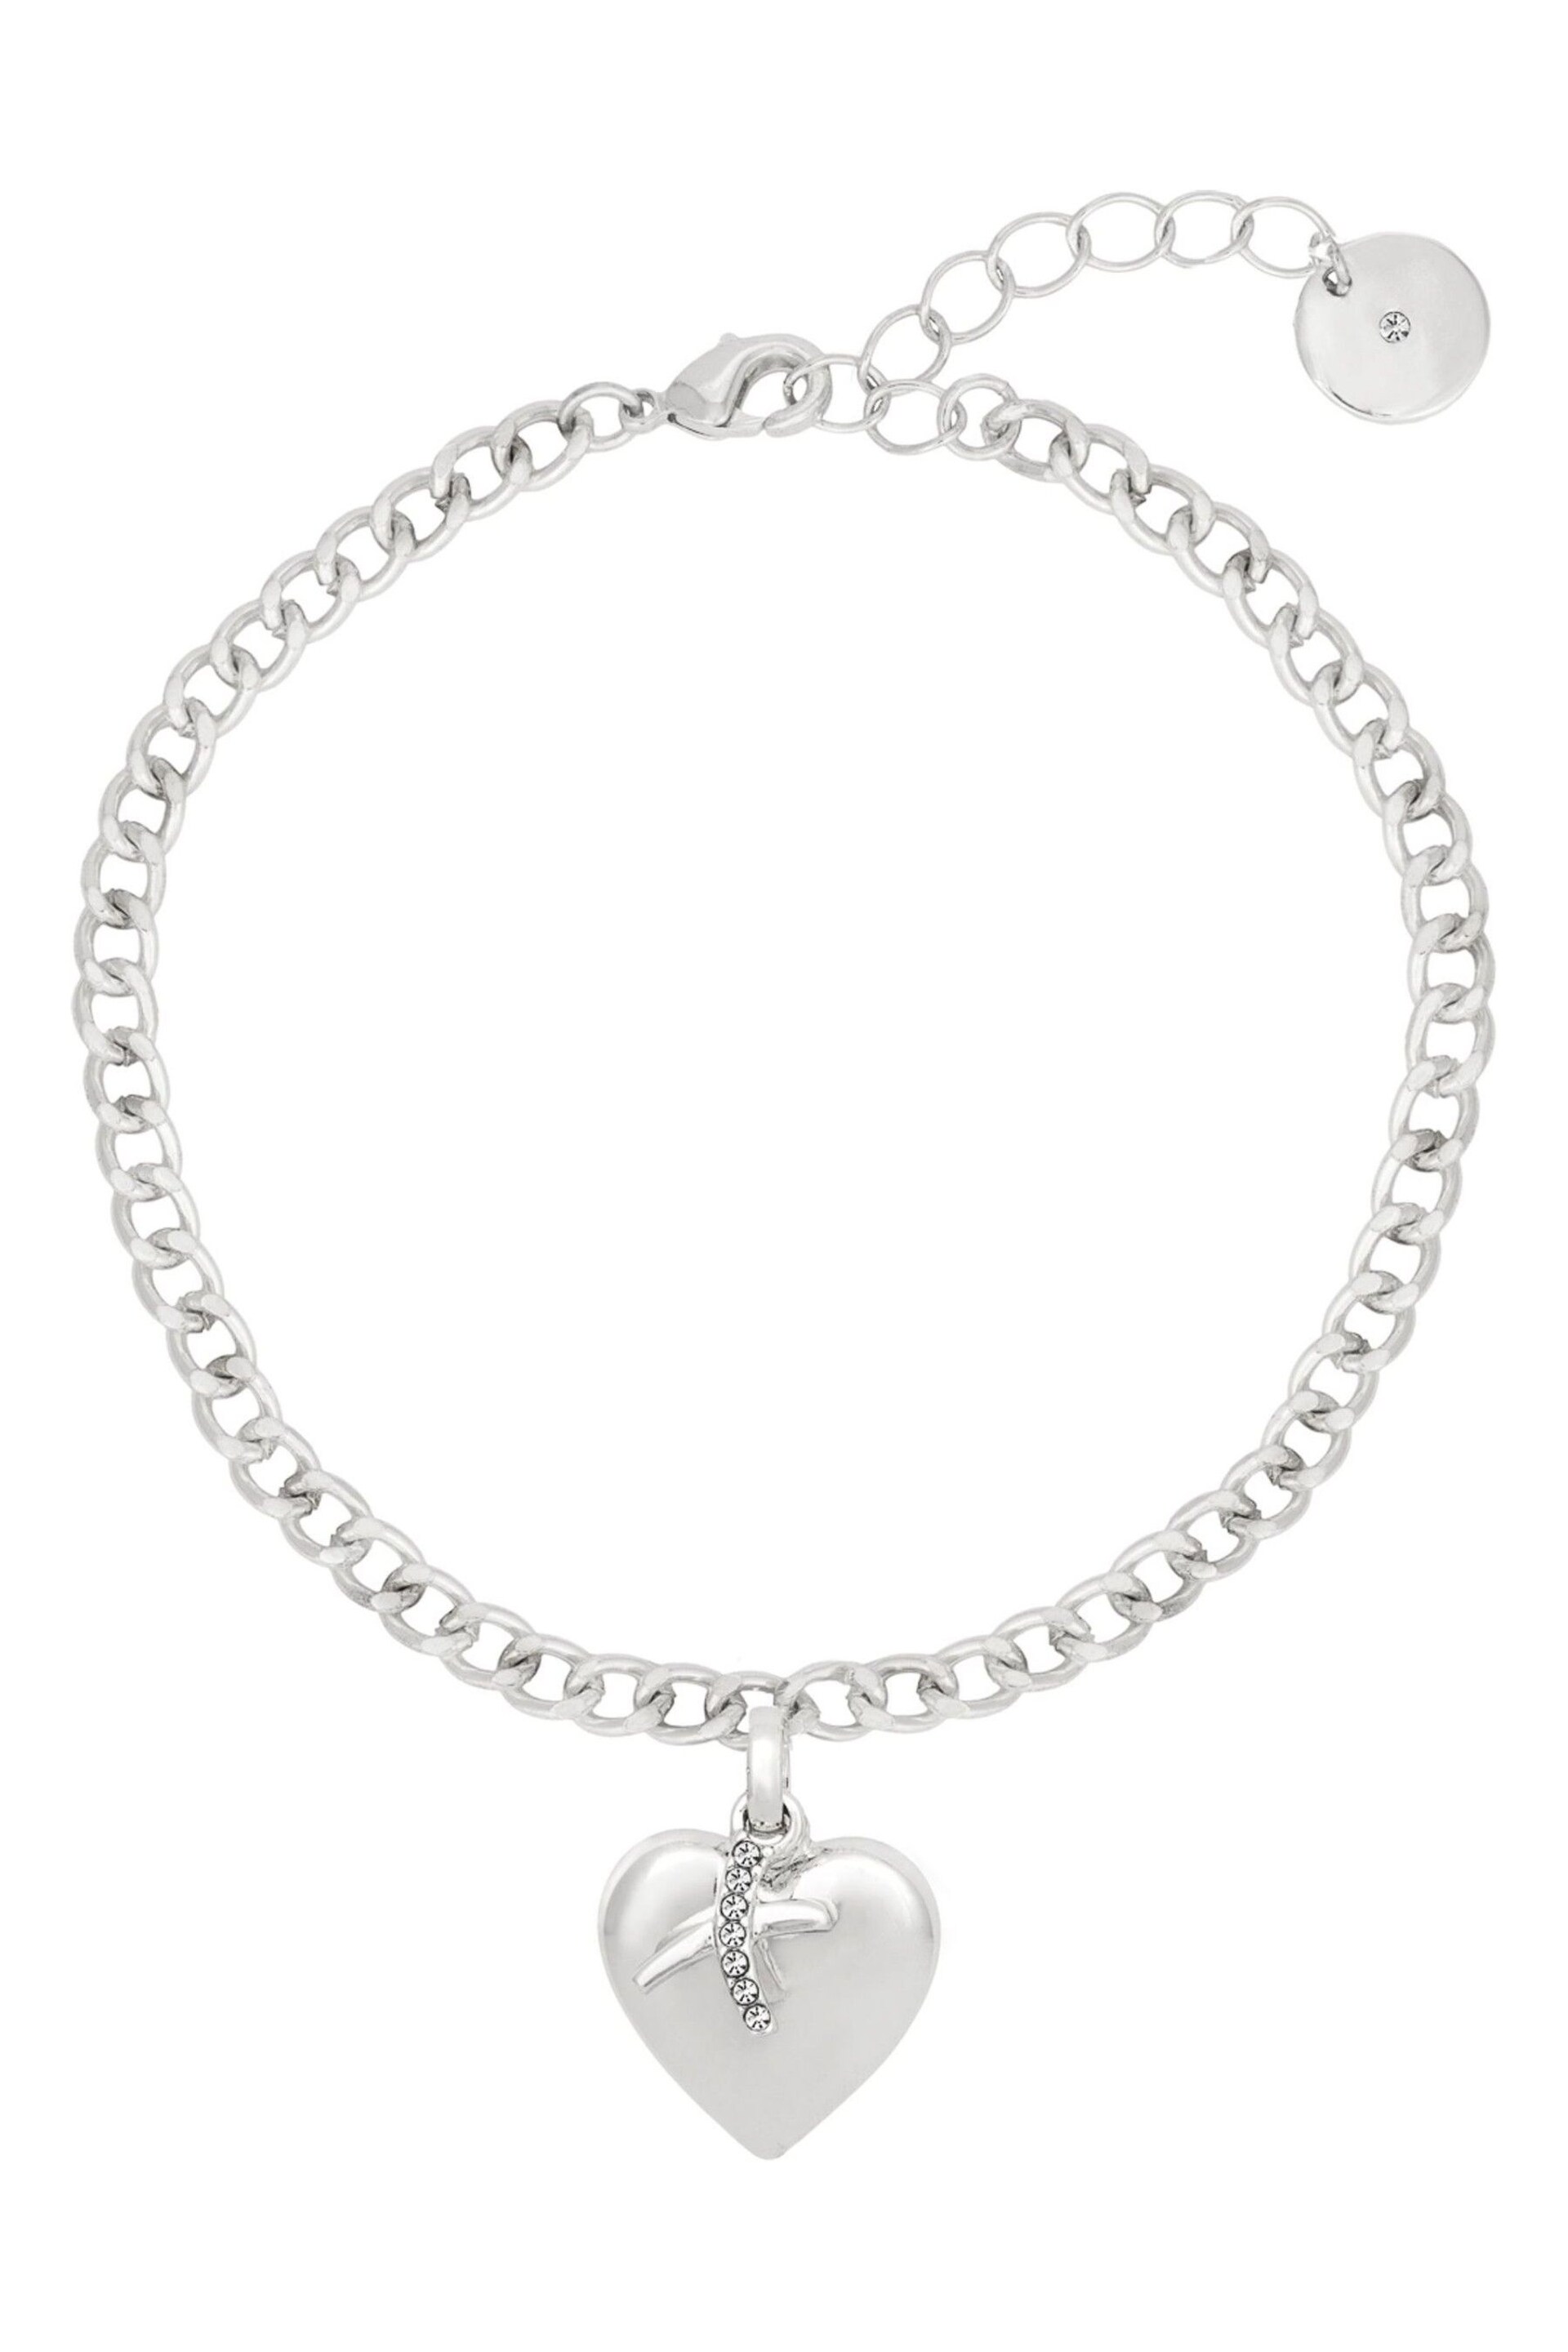 Caramel Jewellery London Silver Chunky 'Cherish' Bracelet - Image 3 of 4